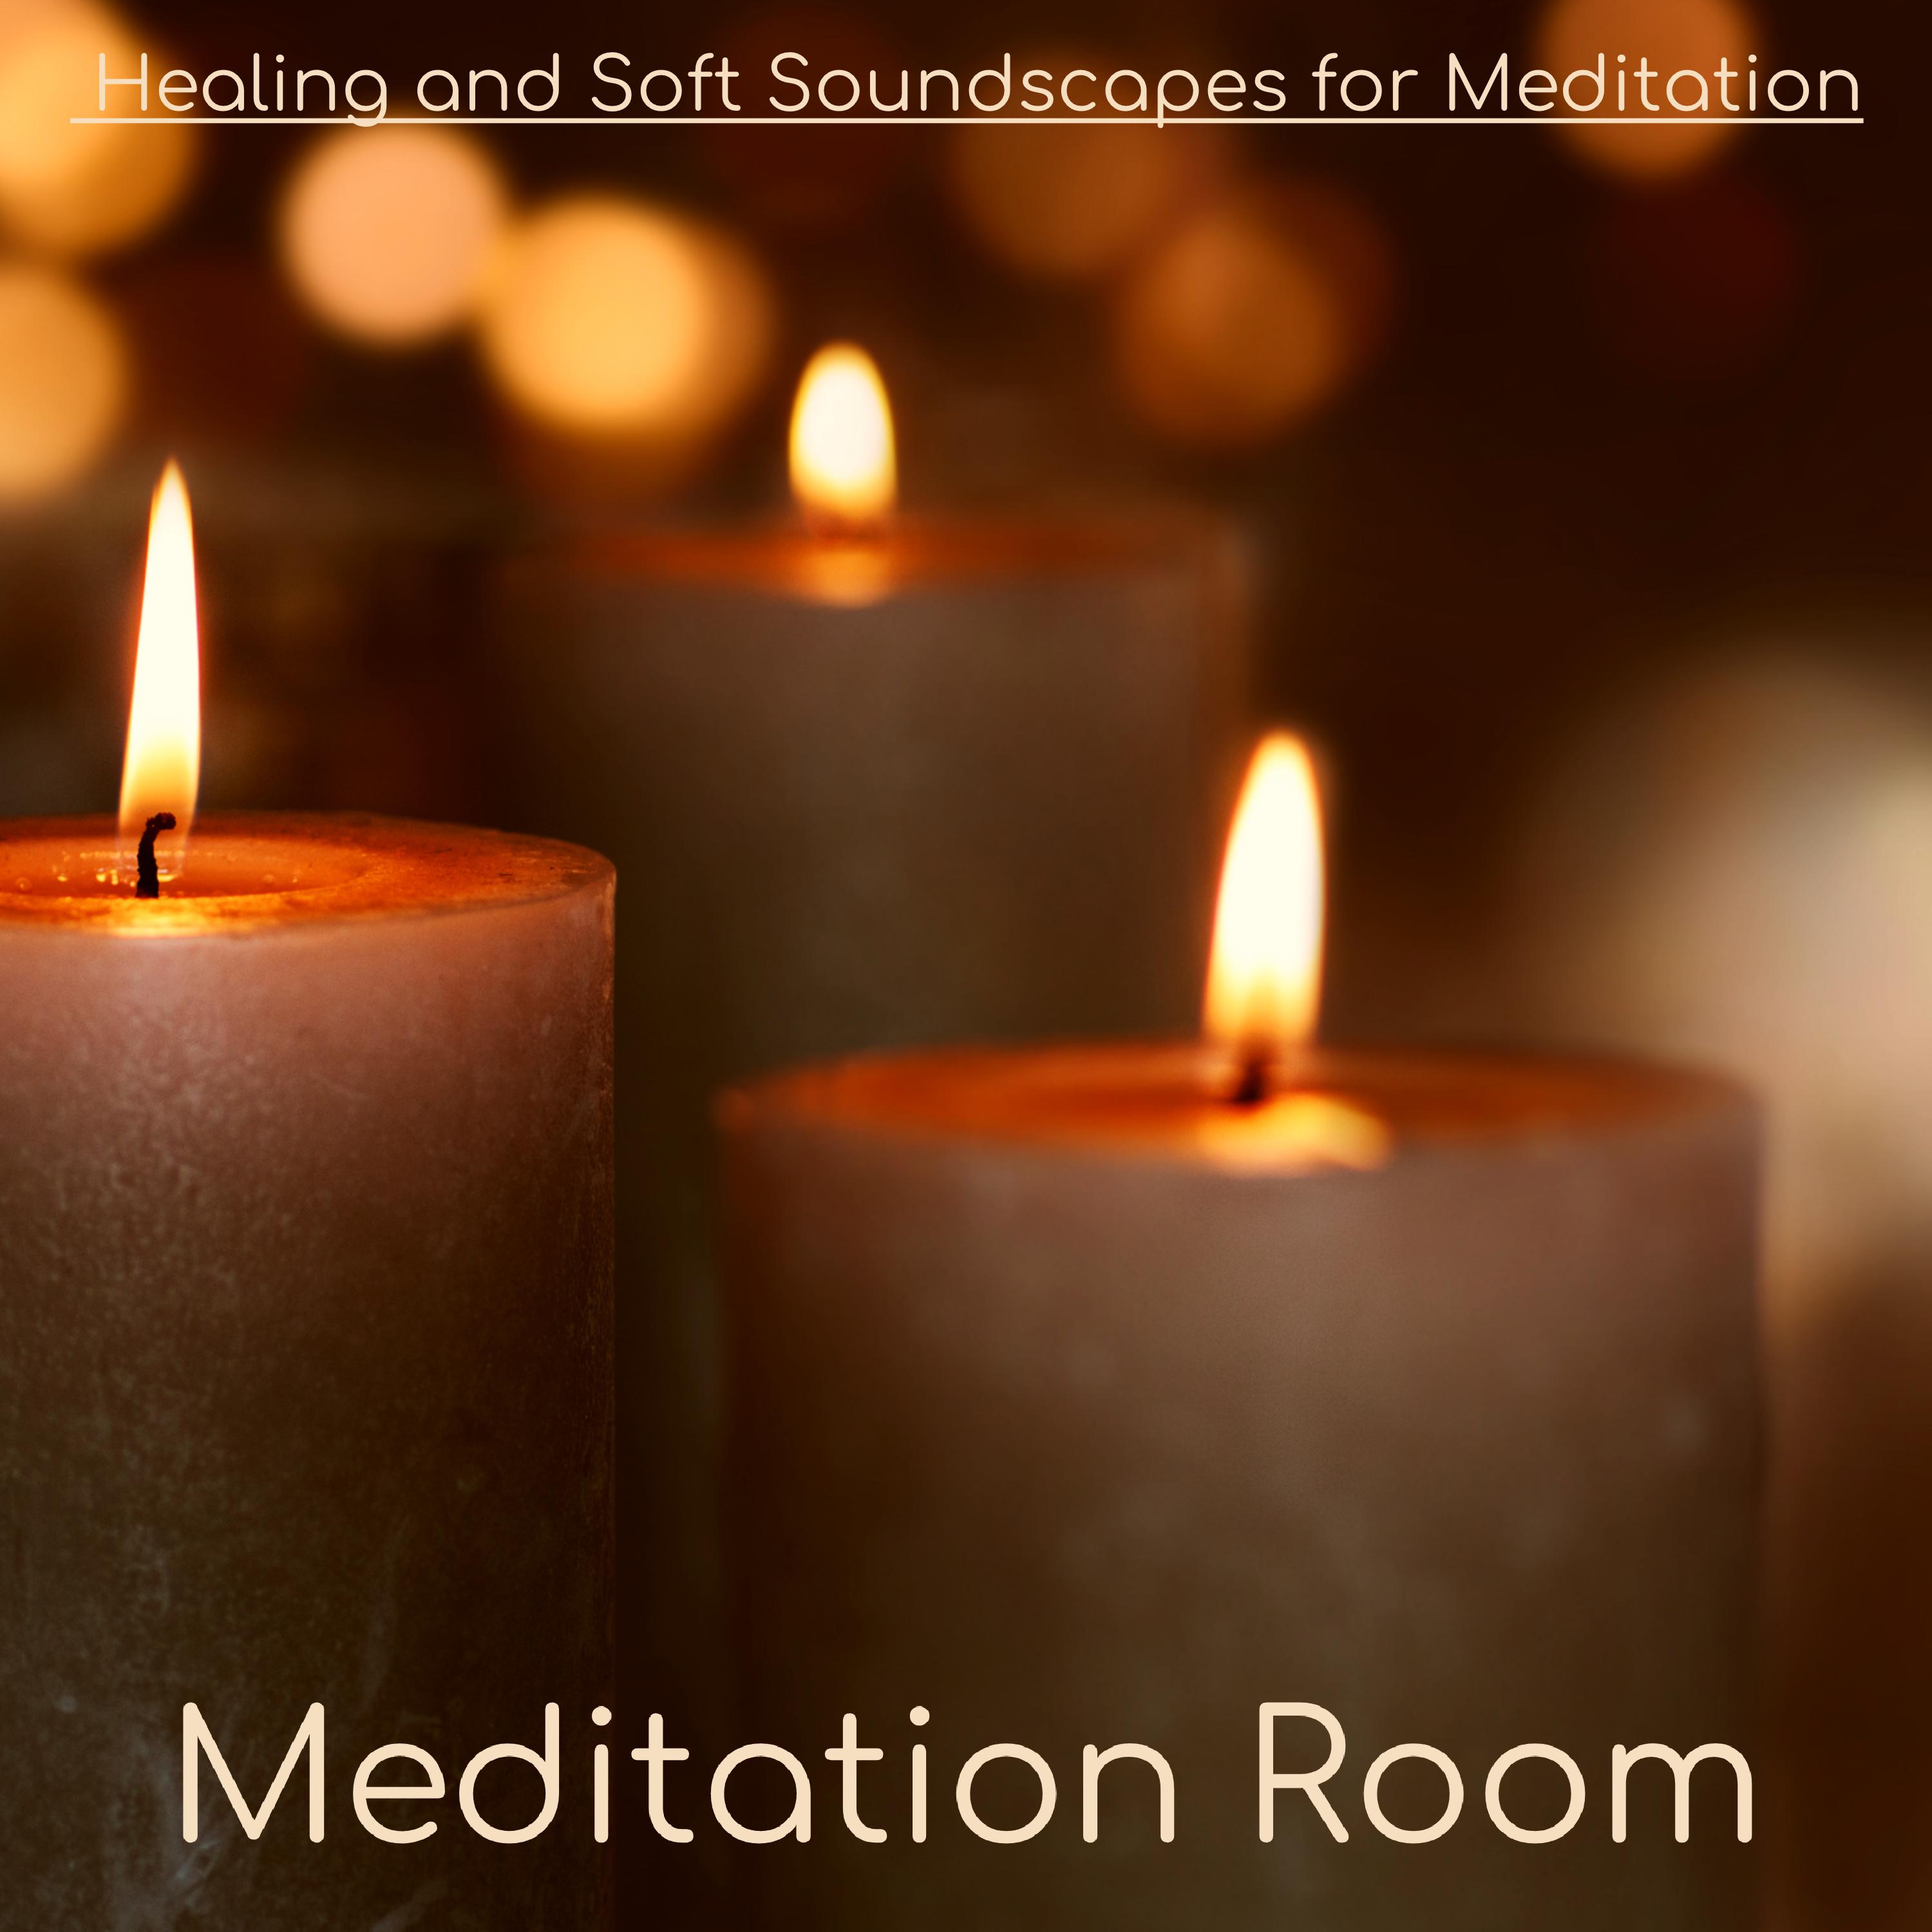 Meditation Room  Healing and Soft Soundscapes for Meditation